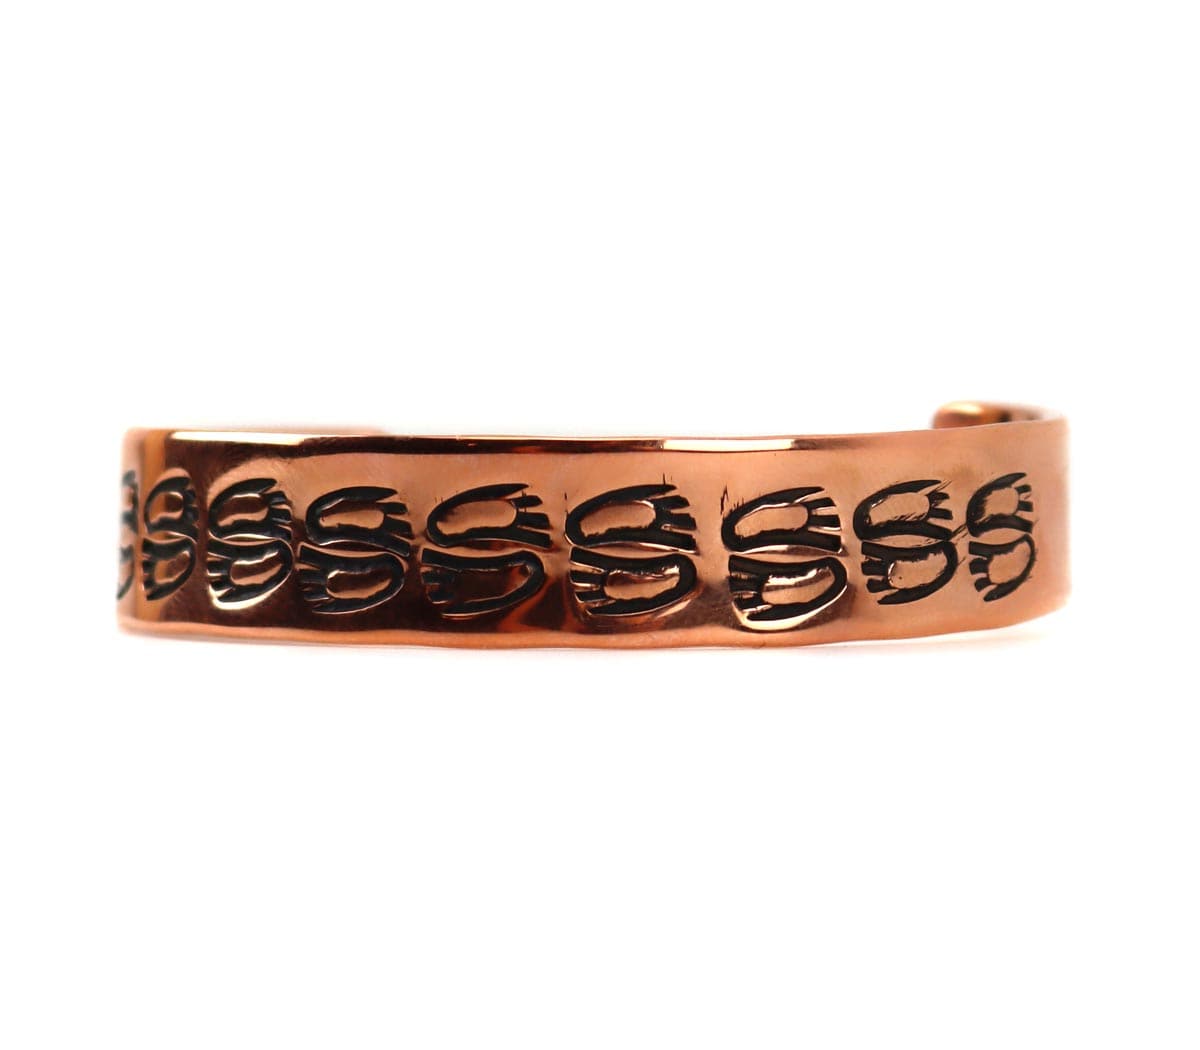 John K. Aguilar - Santo Domingo (Kewa) Contemporary Copper Bracelet with Stamped Design, size 6.75 (J14864)
